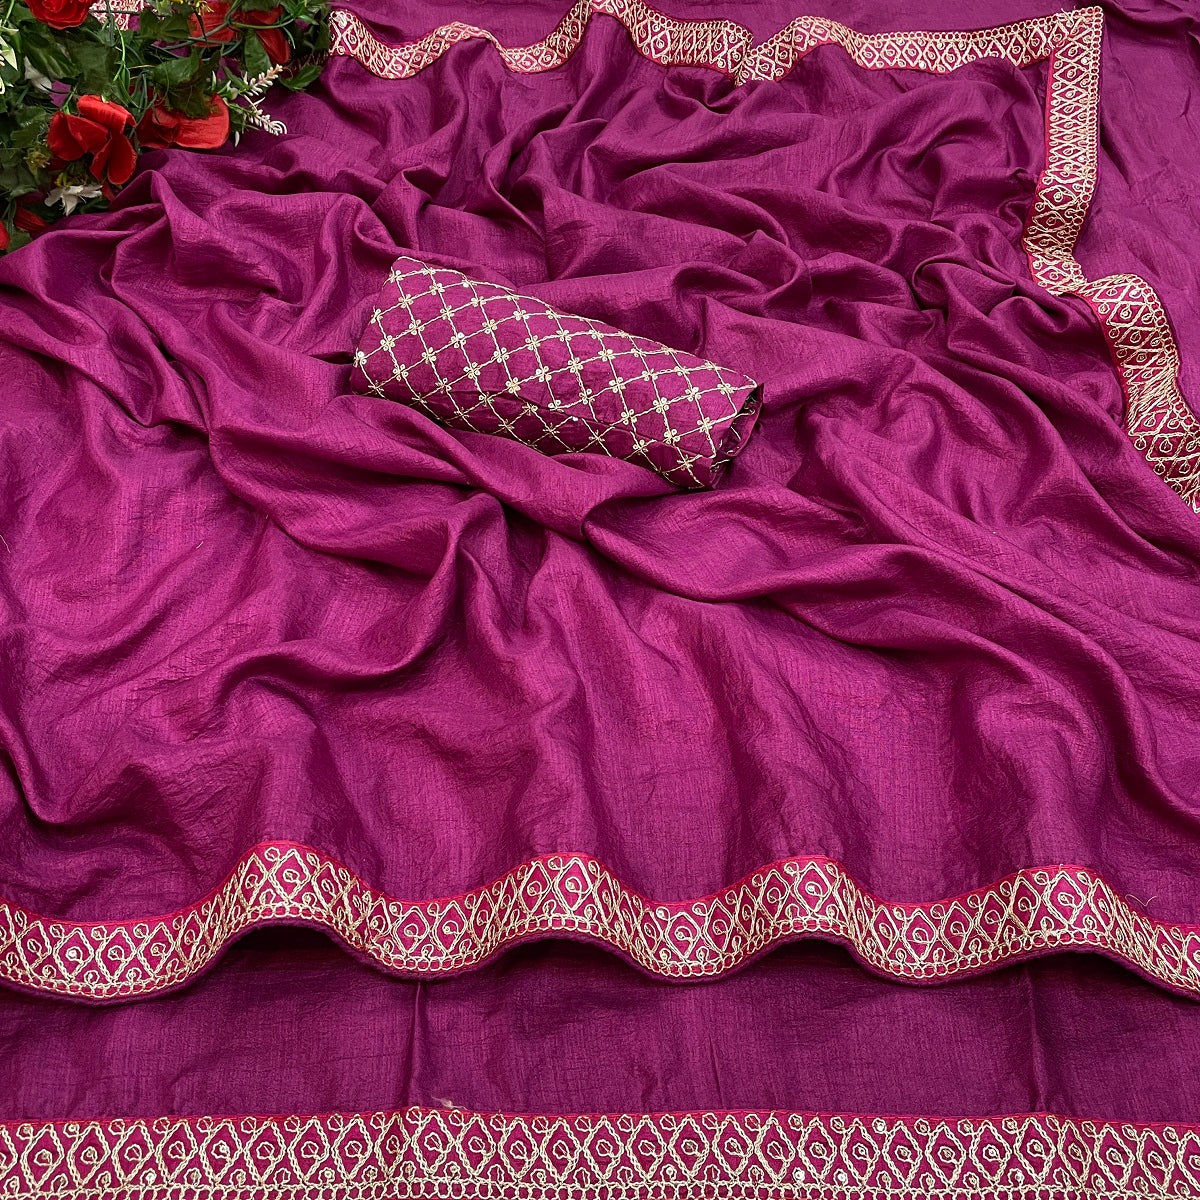 Women's Purple Silk Blend Lace Work Saree - Vamika